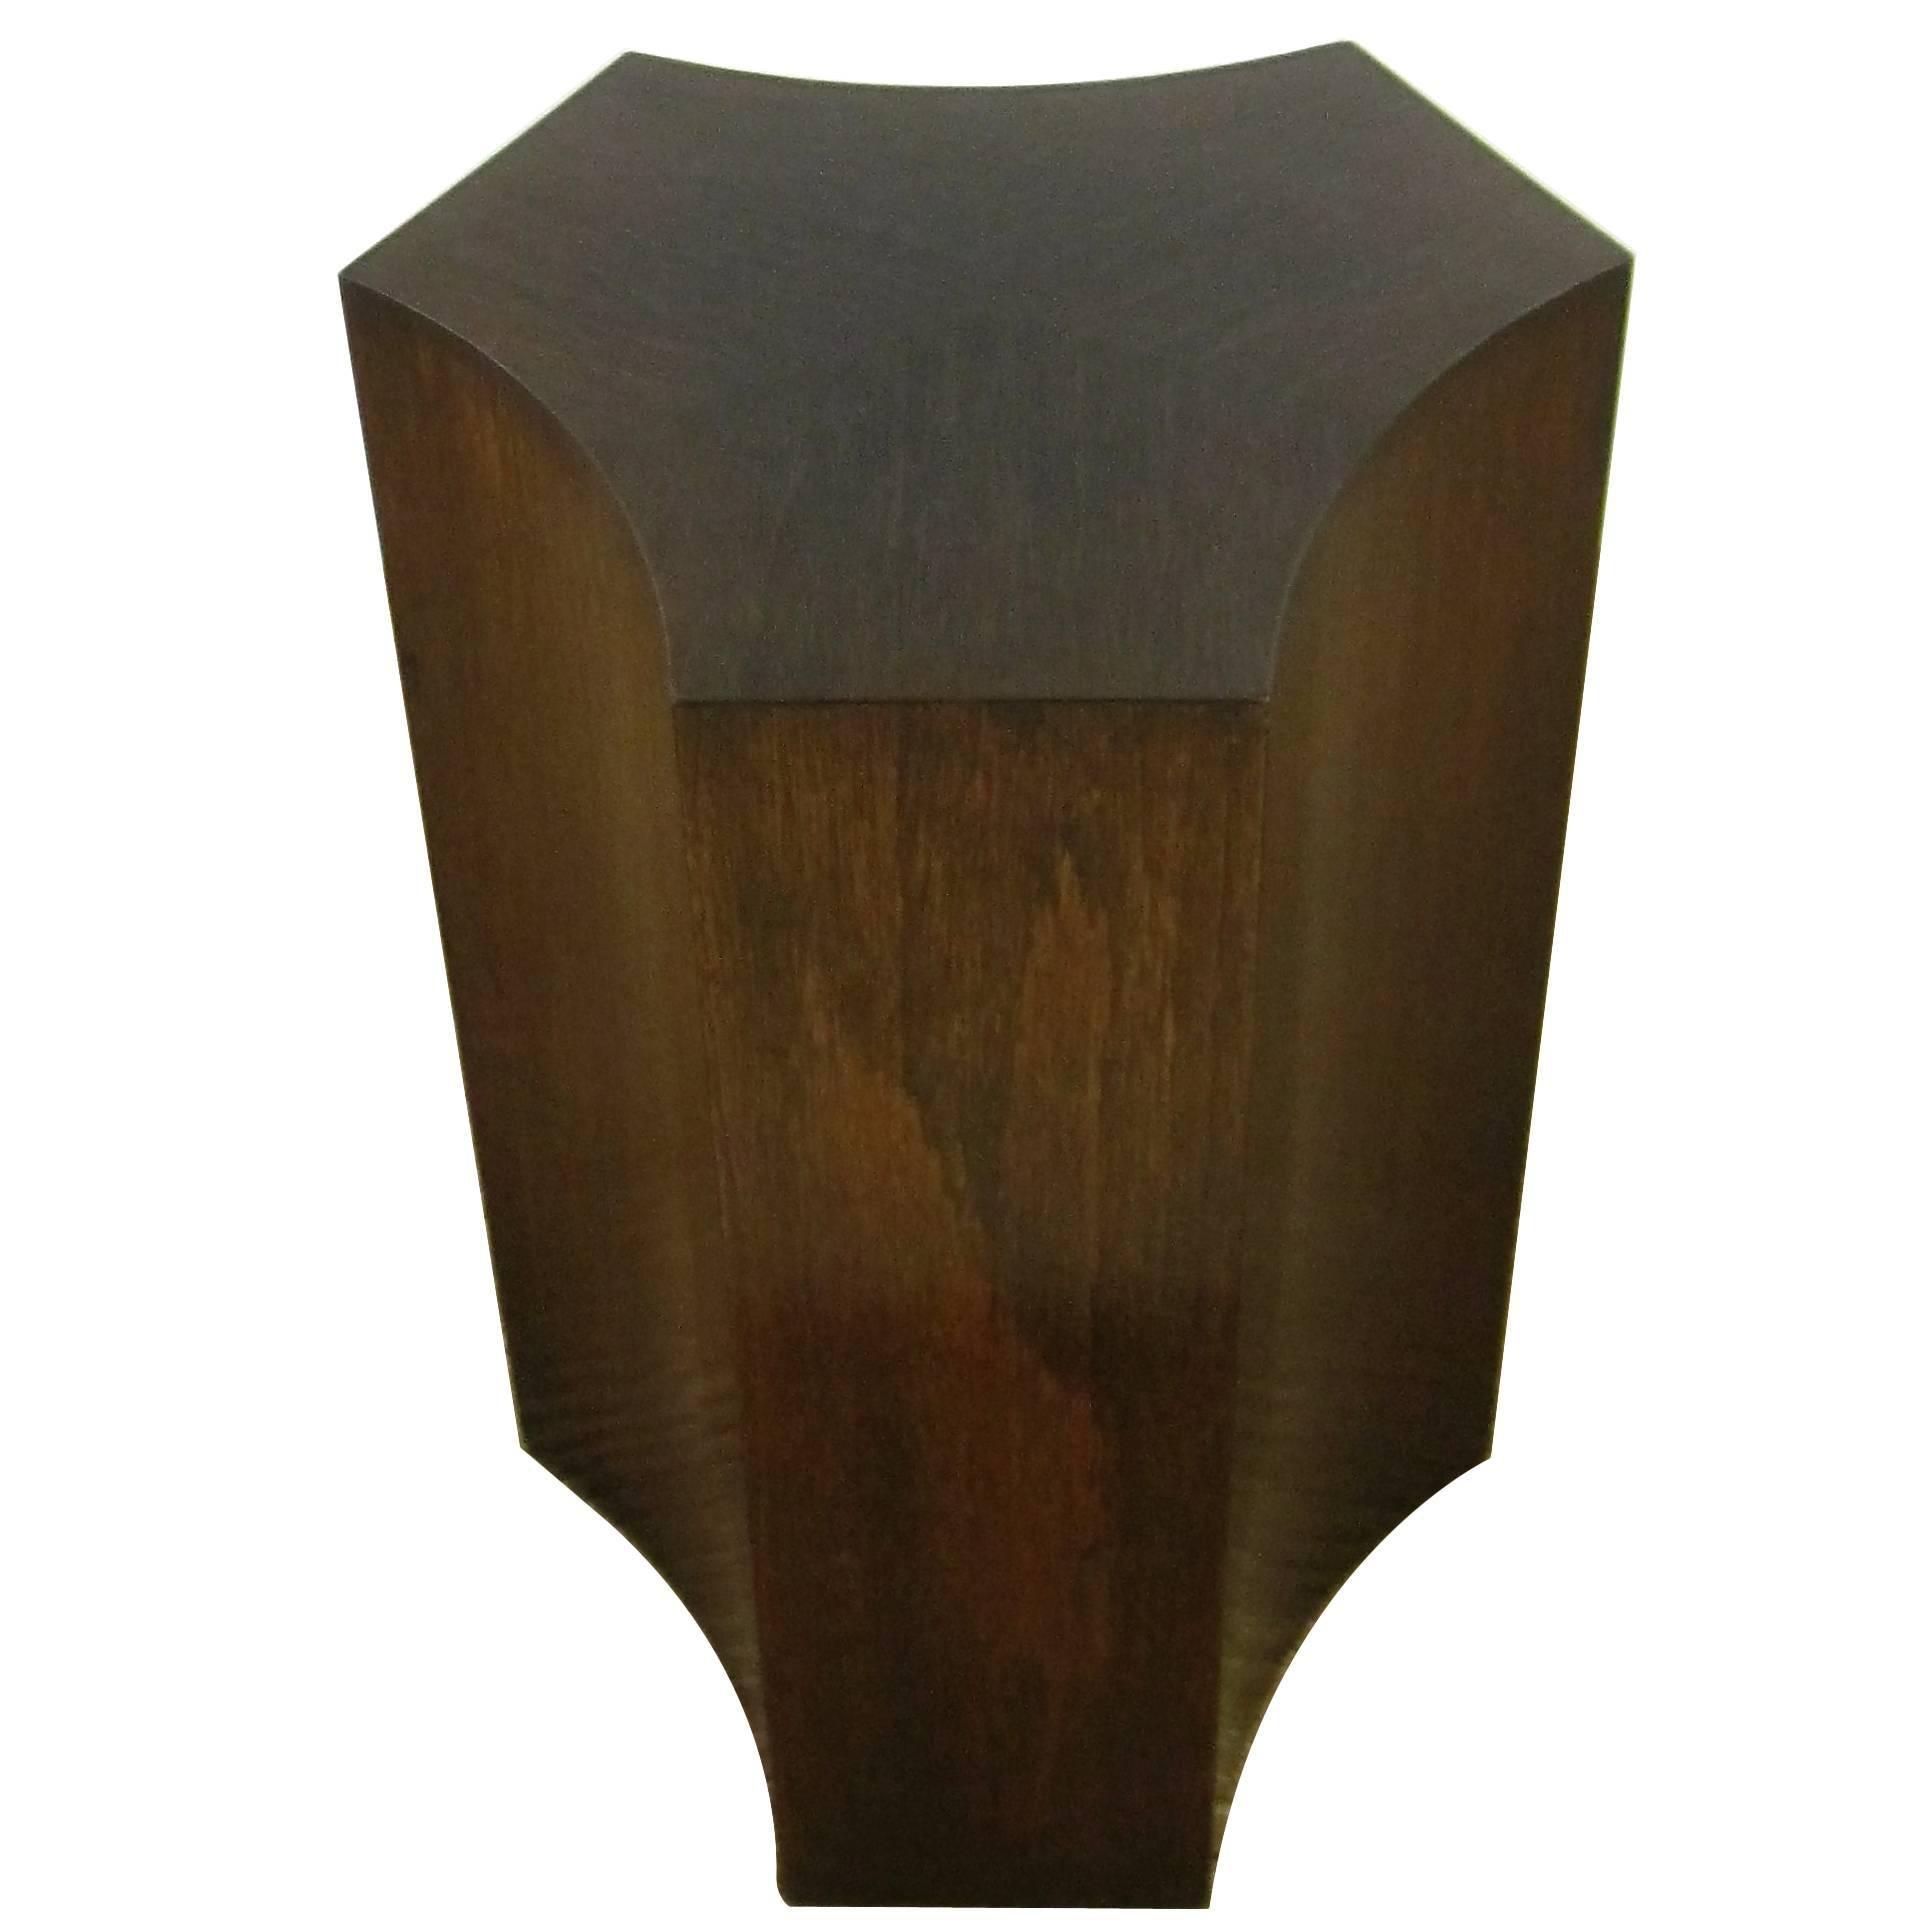  Elegant Vintage Geometric Pedestal Side Table